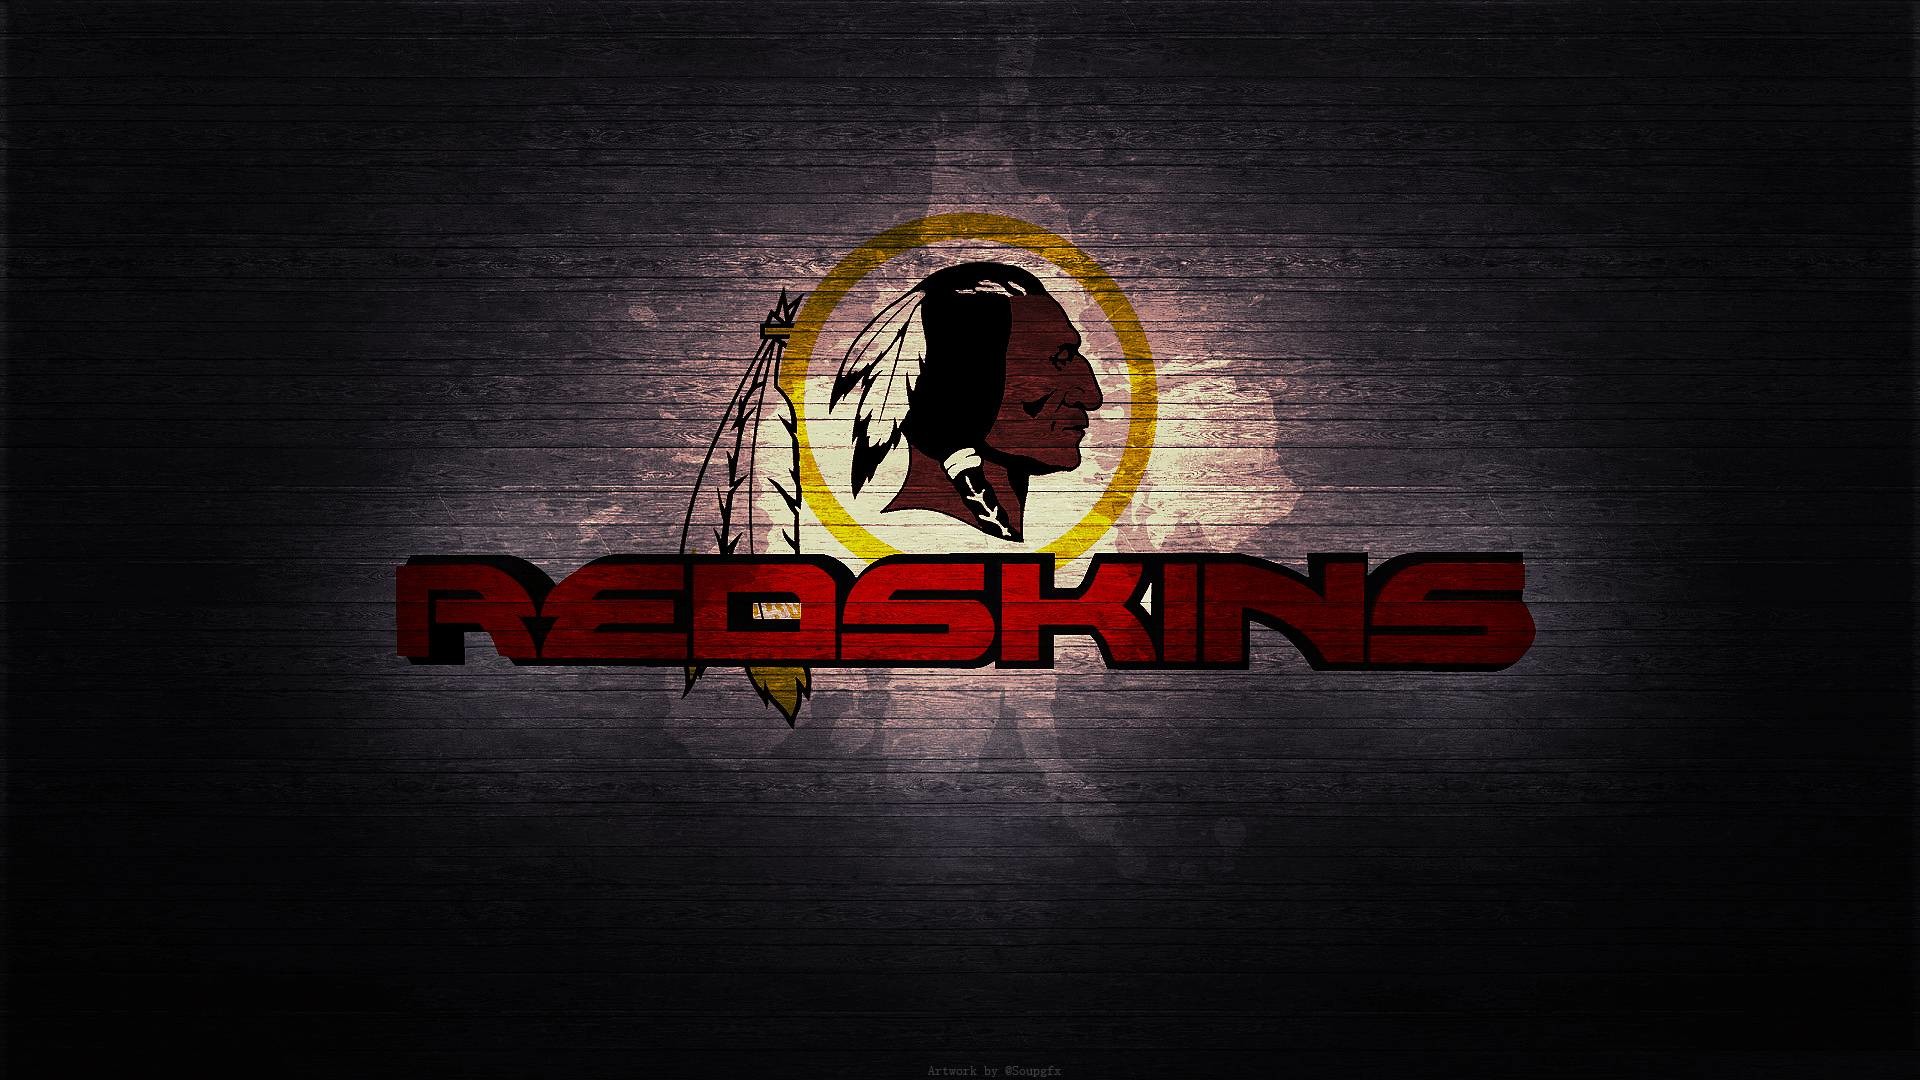 Washington Redskins Best Wallpaper 35506 Hi-Resolution | Best Free JPG